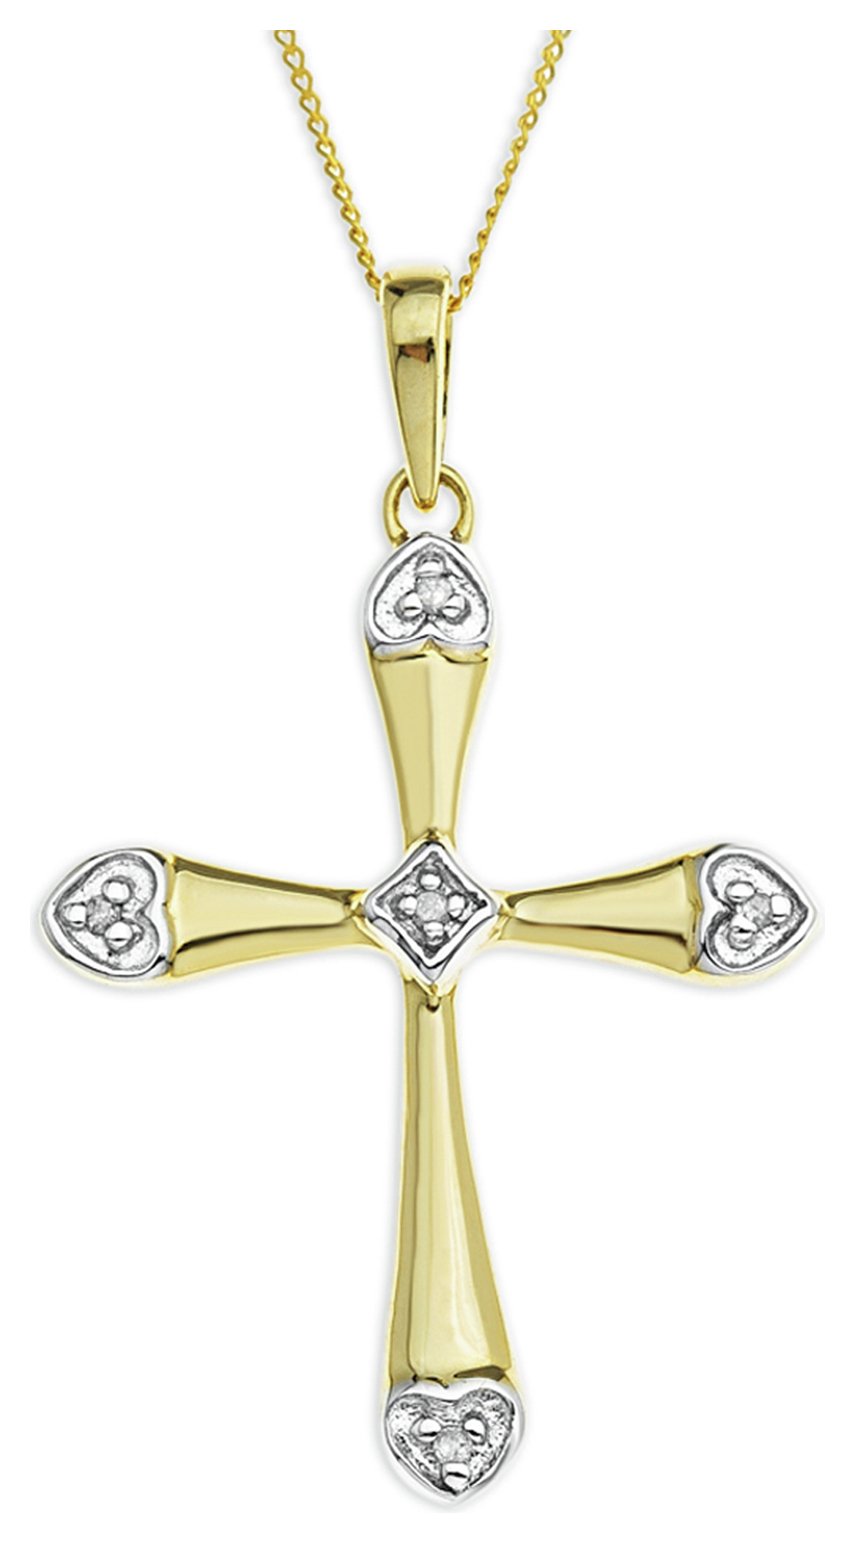 9ct Gold Diamond Set Delicate Cross Pendant Necklace.